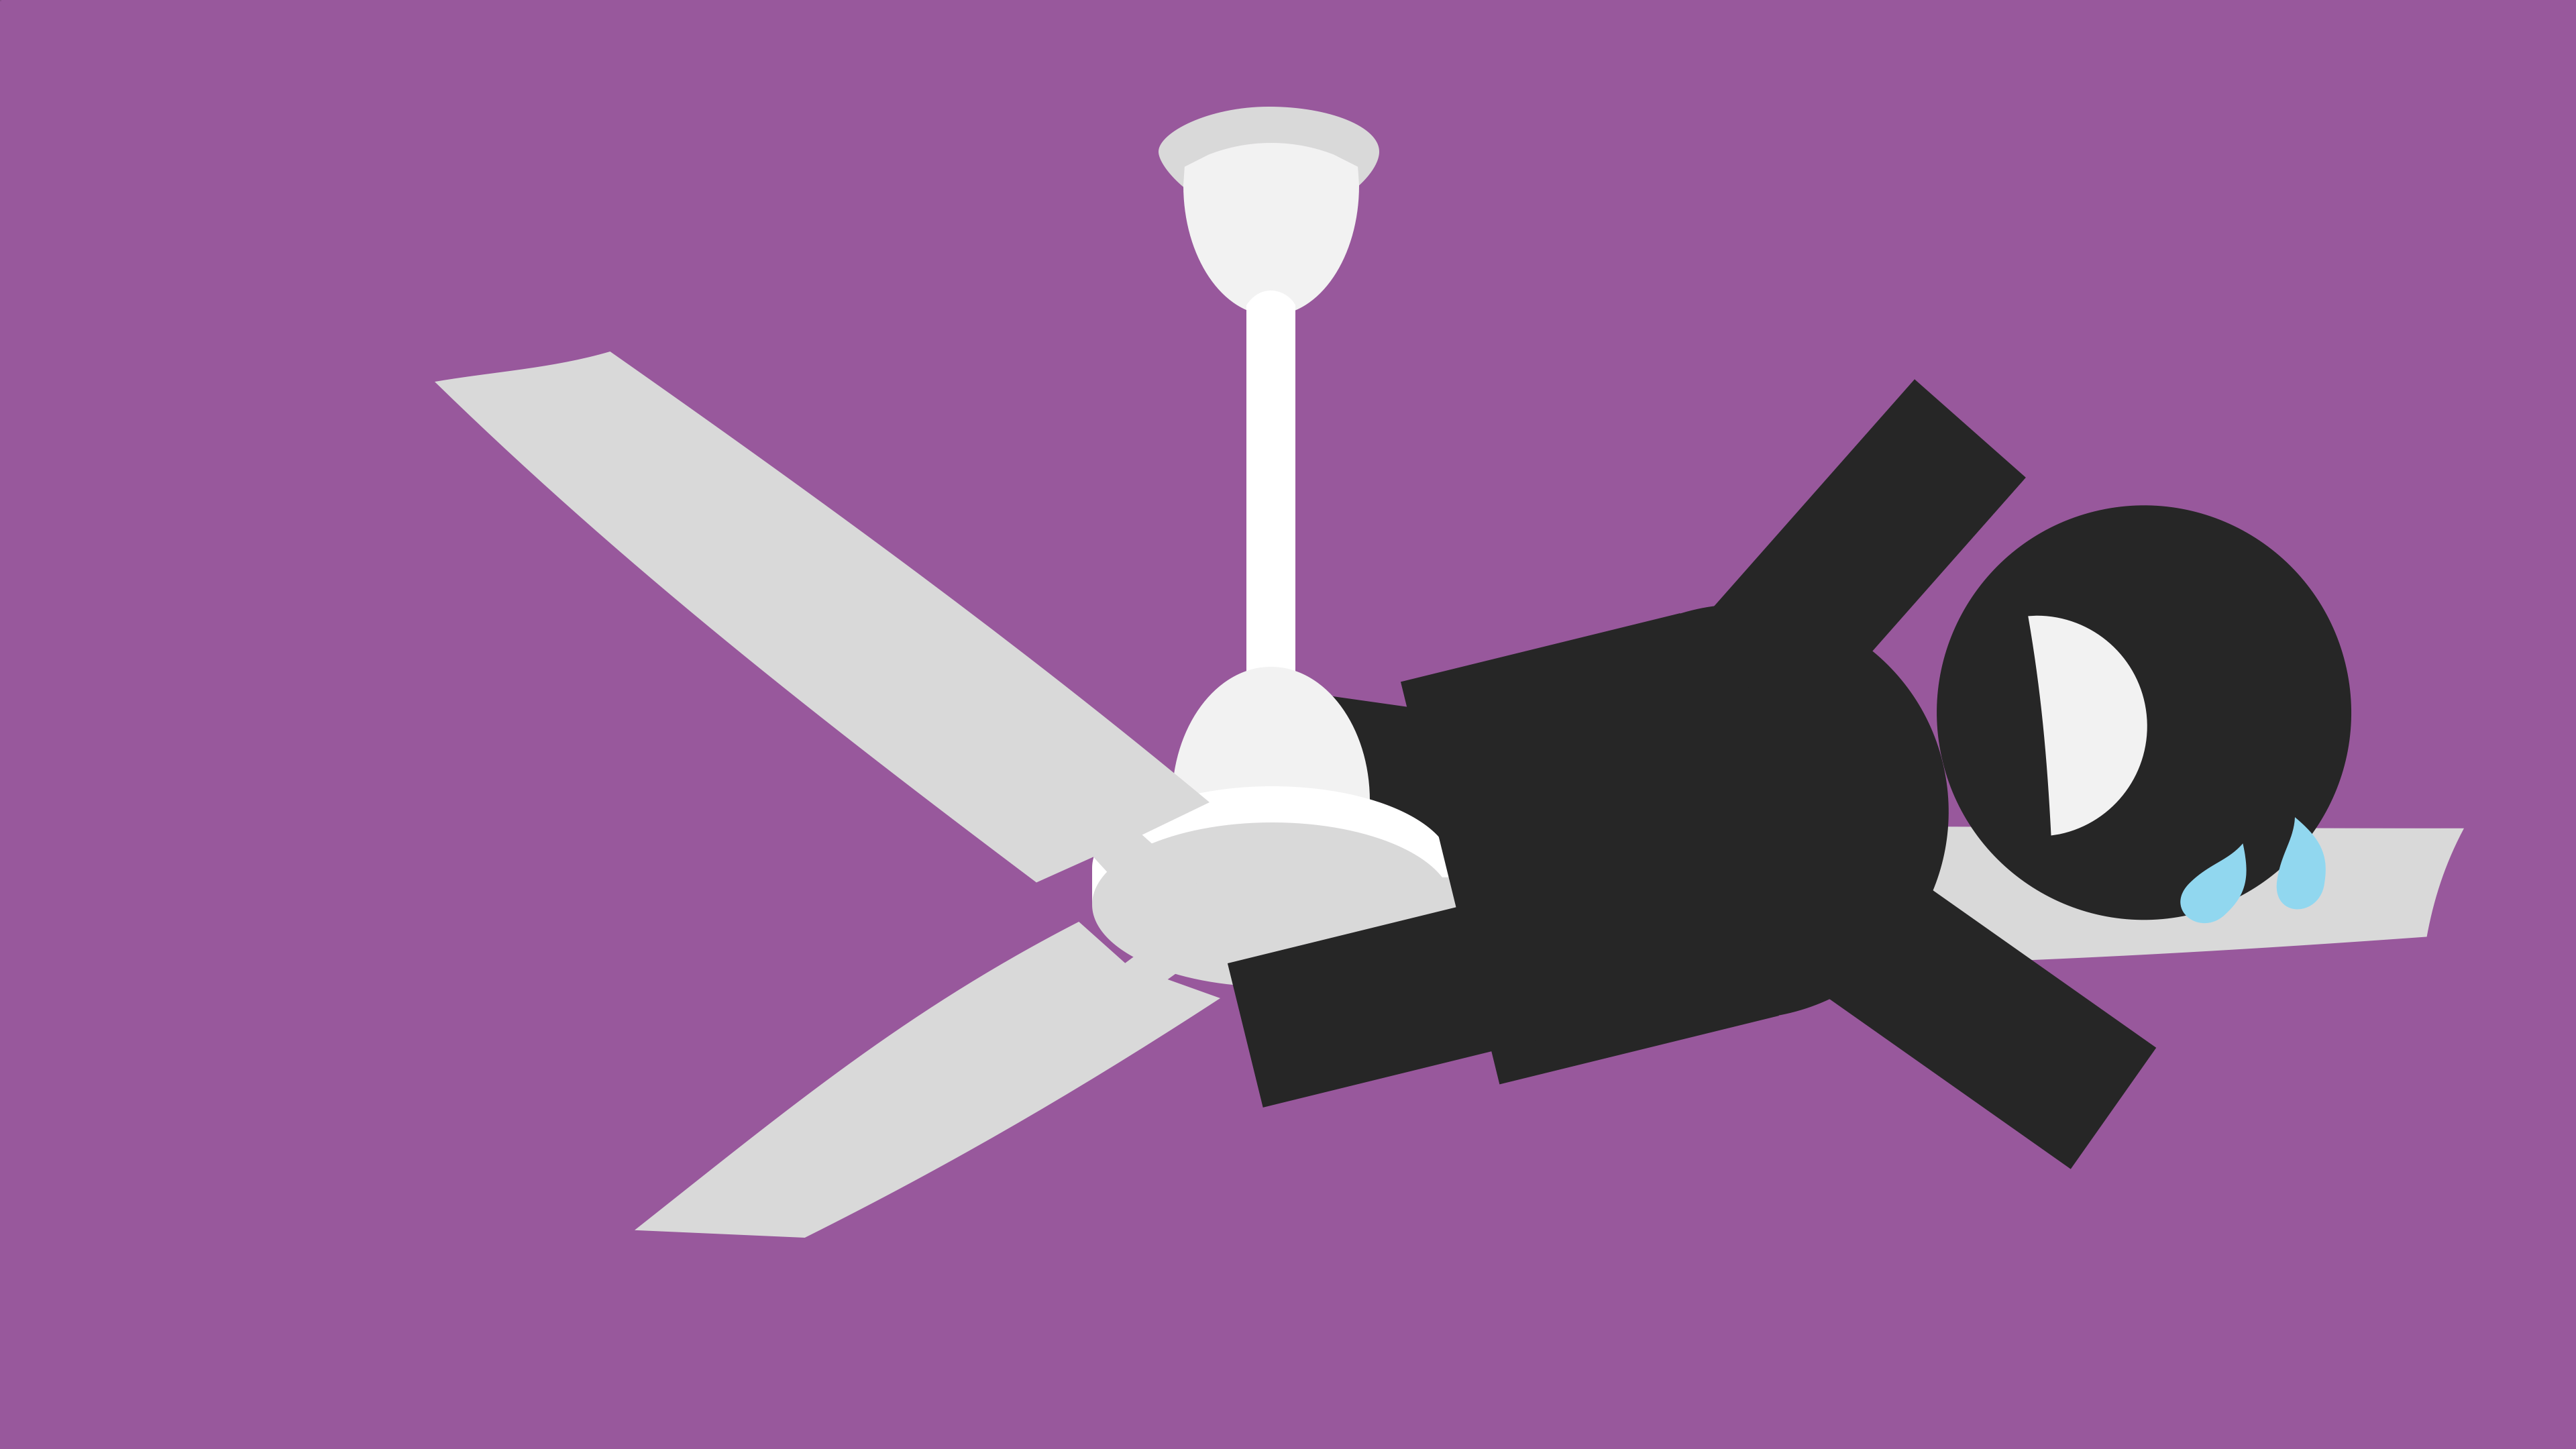 A person is stuck in a ceiling fan